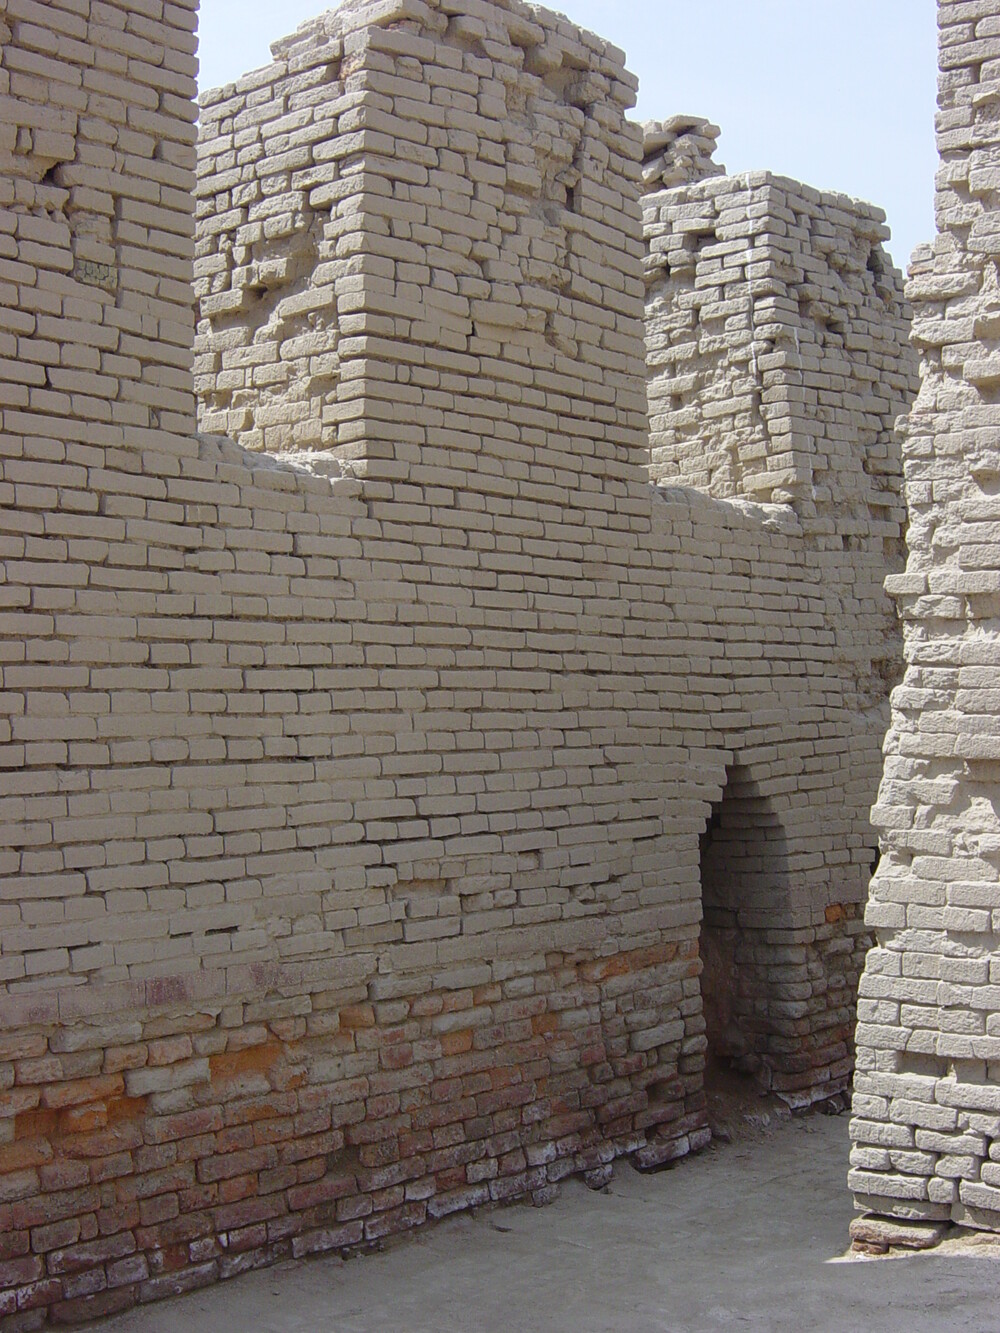 Ruines archéologiques de Mohenjo-daro (Pakistan). © UNESCO / Junhi Han